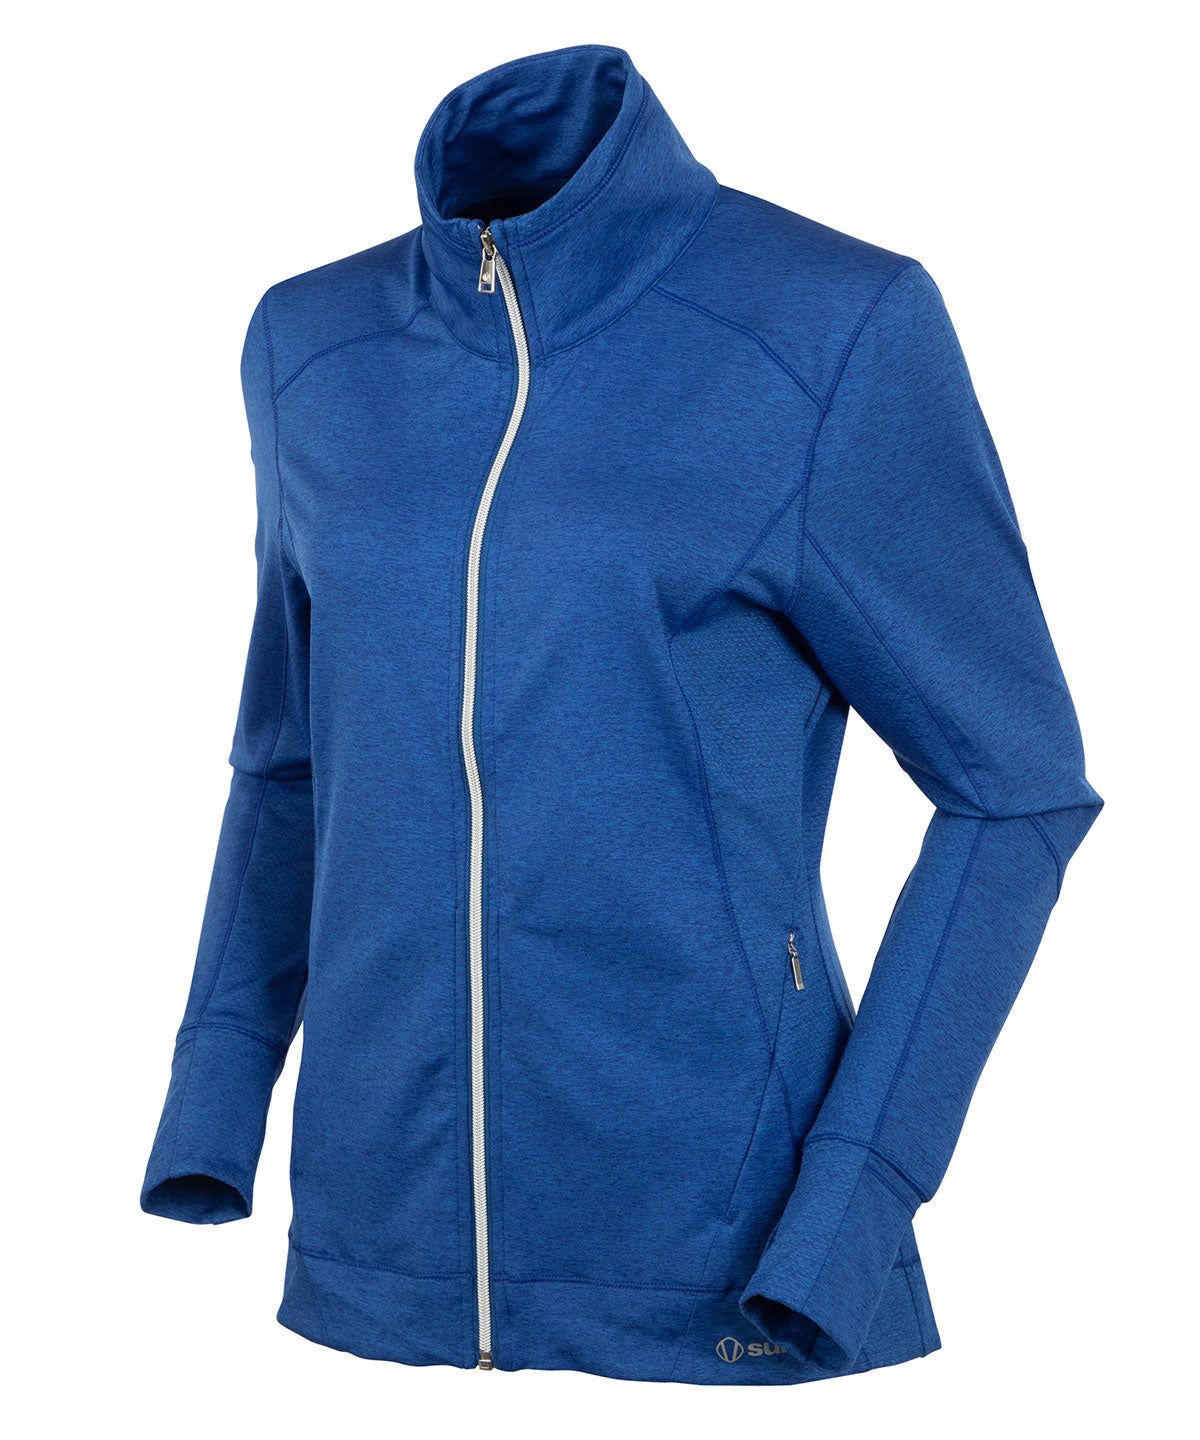 Women's Elena Ultralight Stretch Thermal Layers Jacket